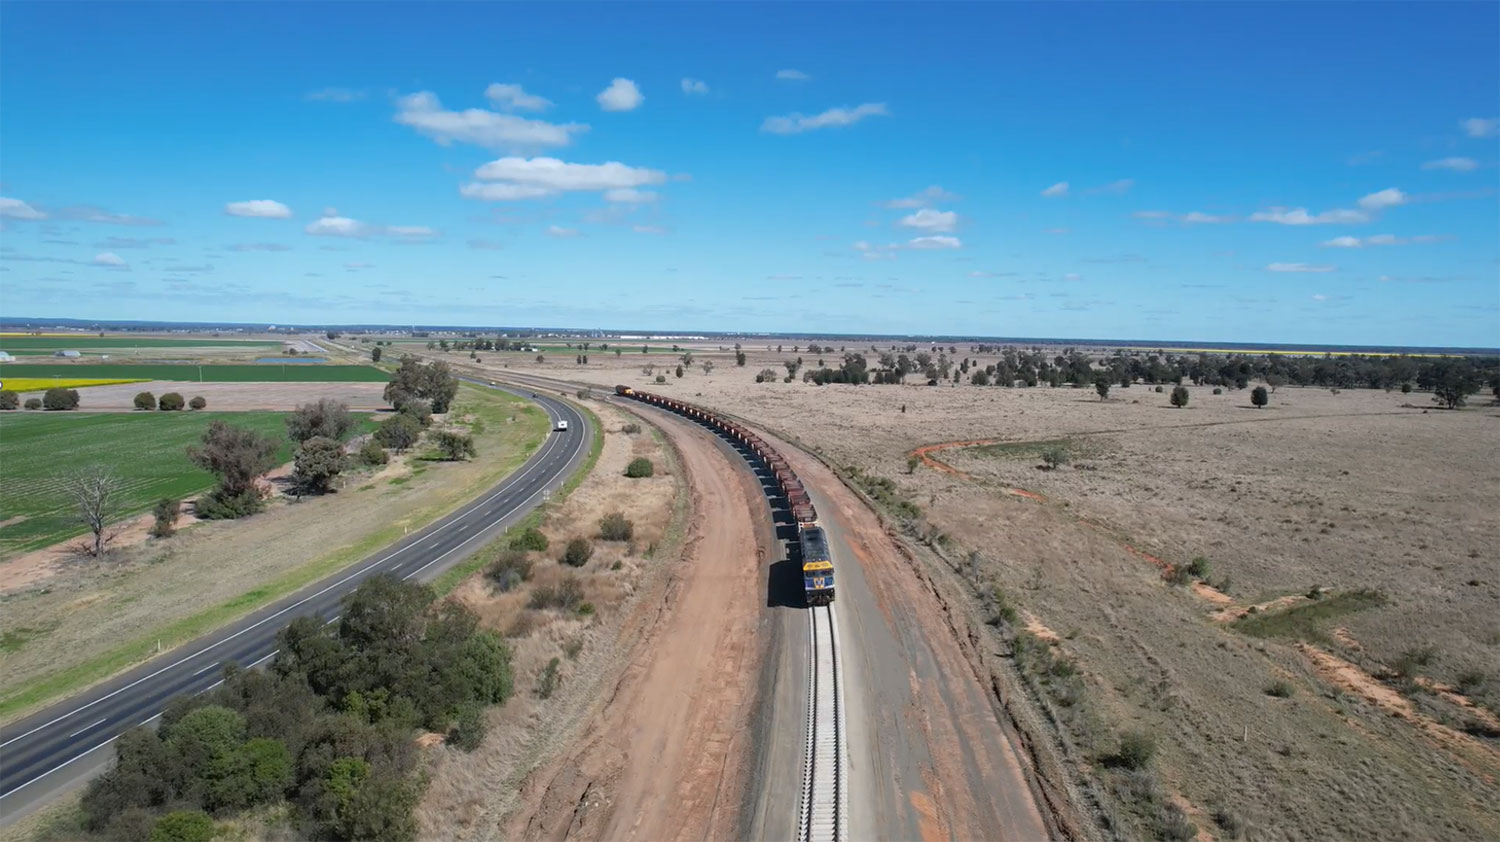 Ballast train arriving at a site just north of Narrabri